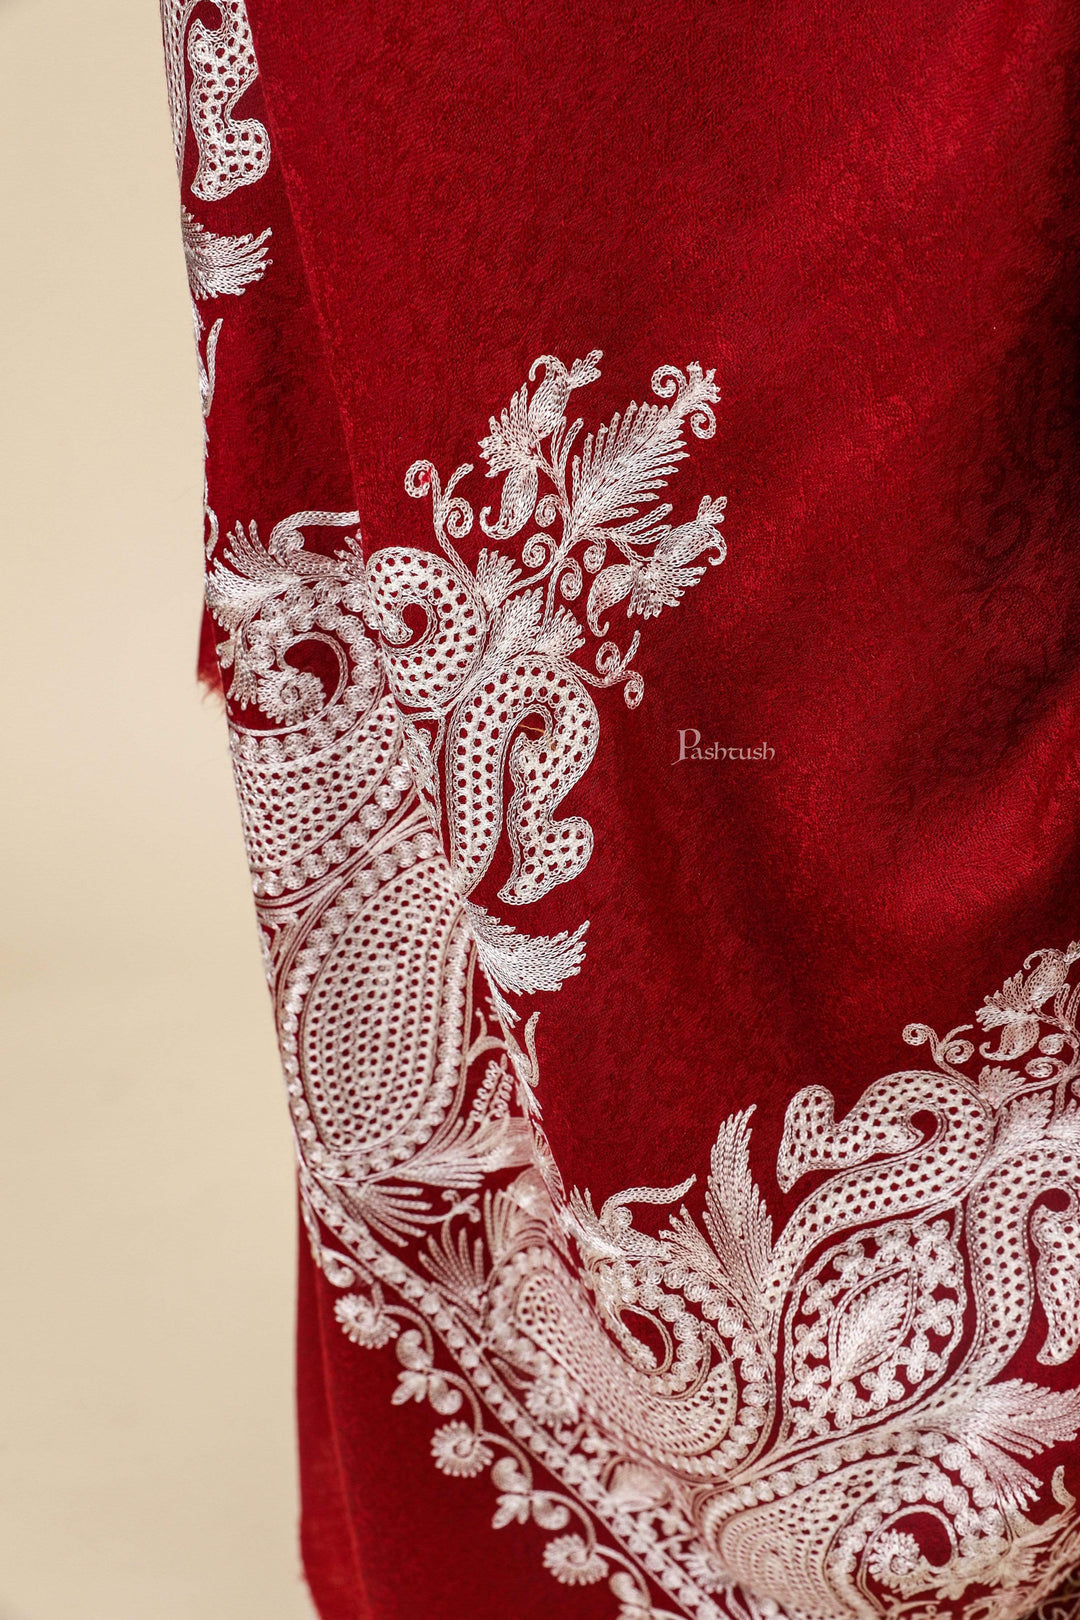 Pashtush India 114x228 Pashtush Womens Fine Wool Shawl, With Tone on Tone Nalki Embroidery, Soft and Warm